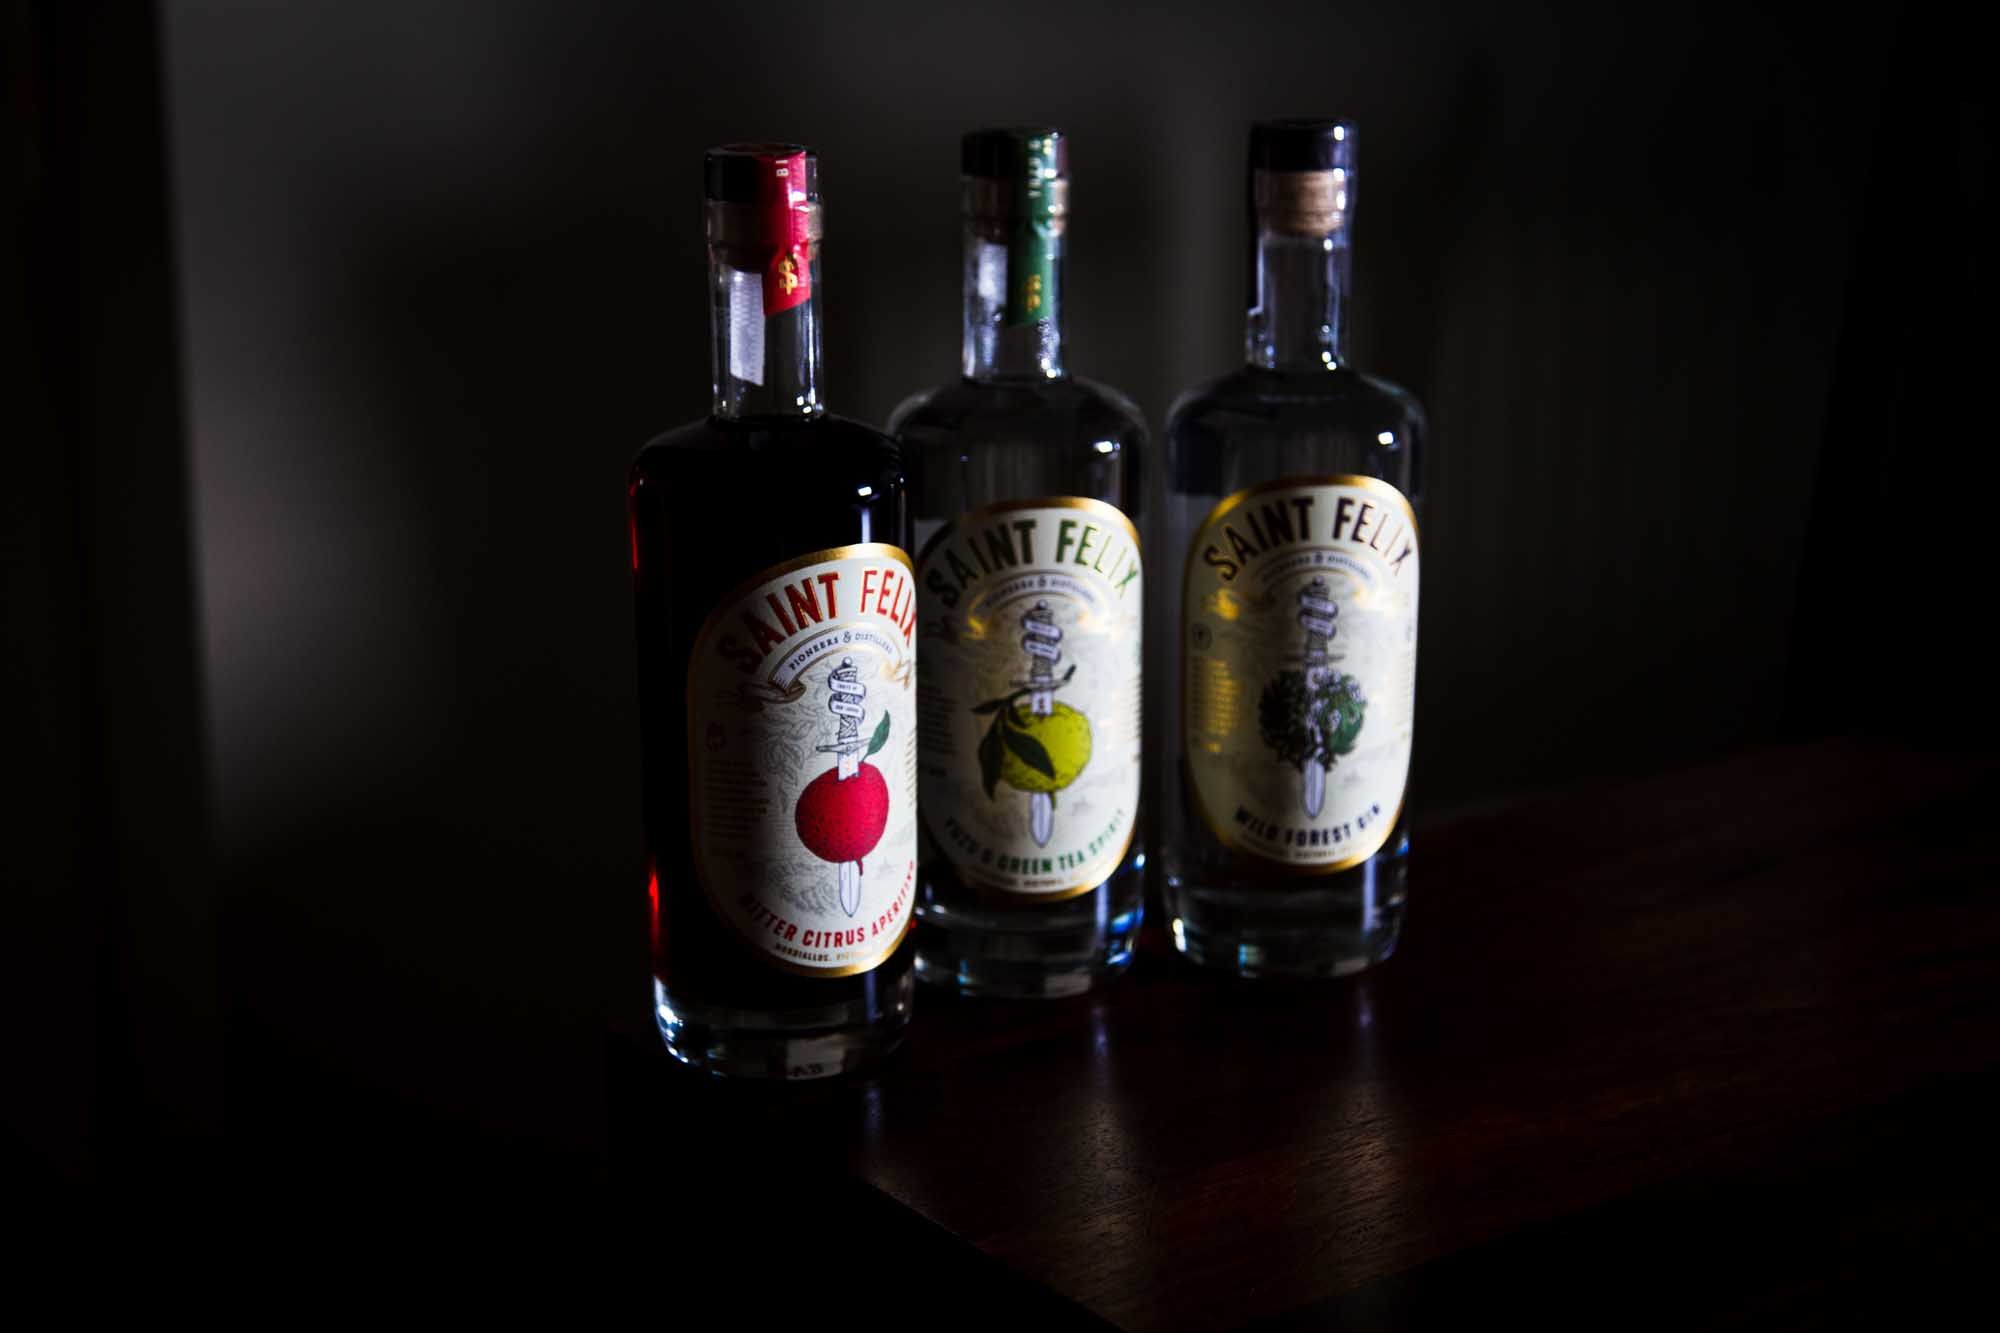 Tastings: a trio of bottles from Saint Felix Distillery in Melbourne